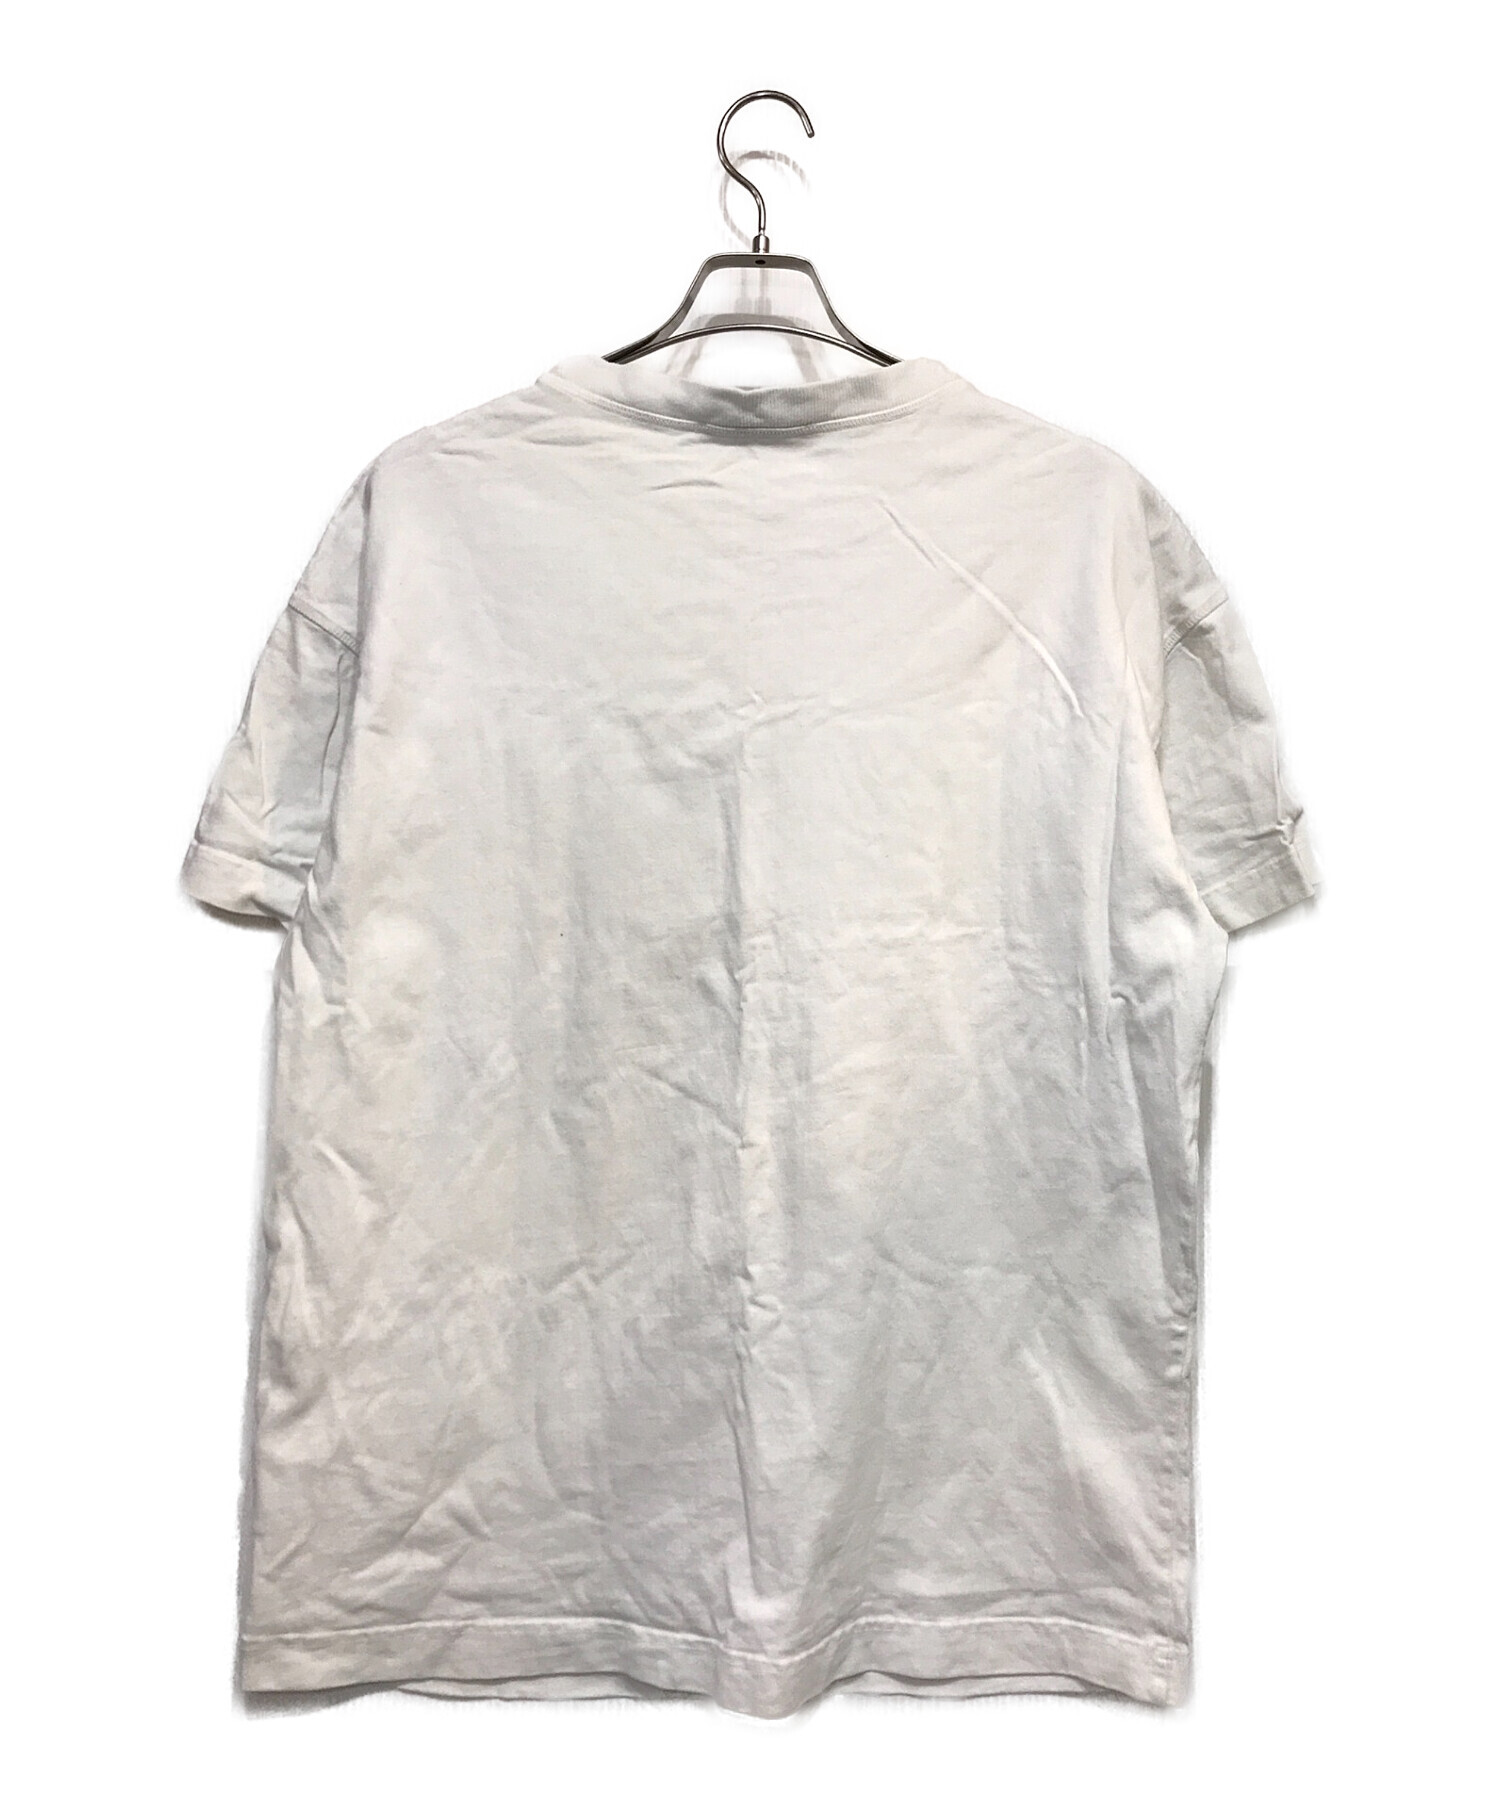 Acne studios (アクネストゥディオズ) オーバーサイズロゴTシャツ ホワイト サイズ:Ｓ